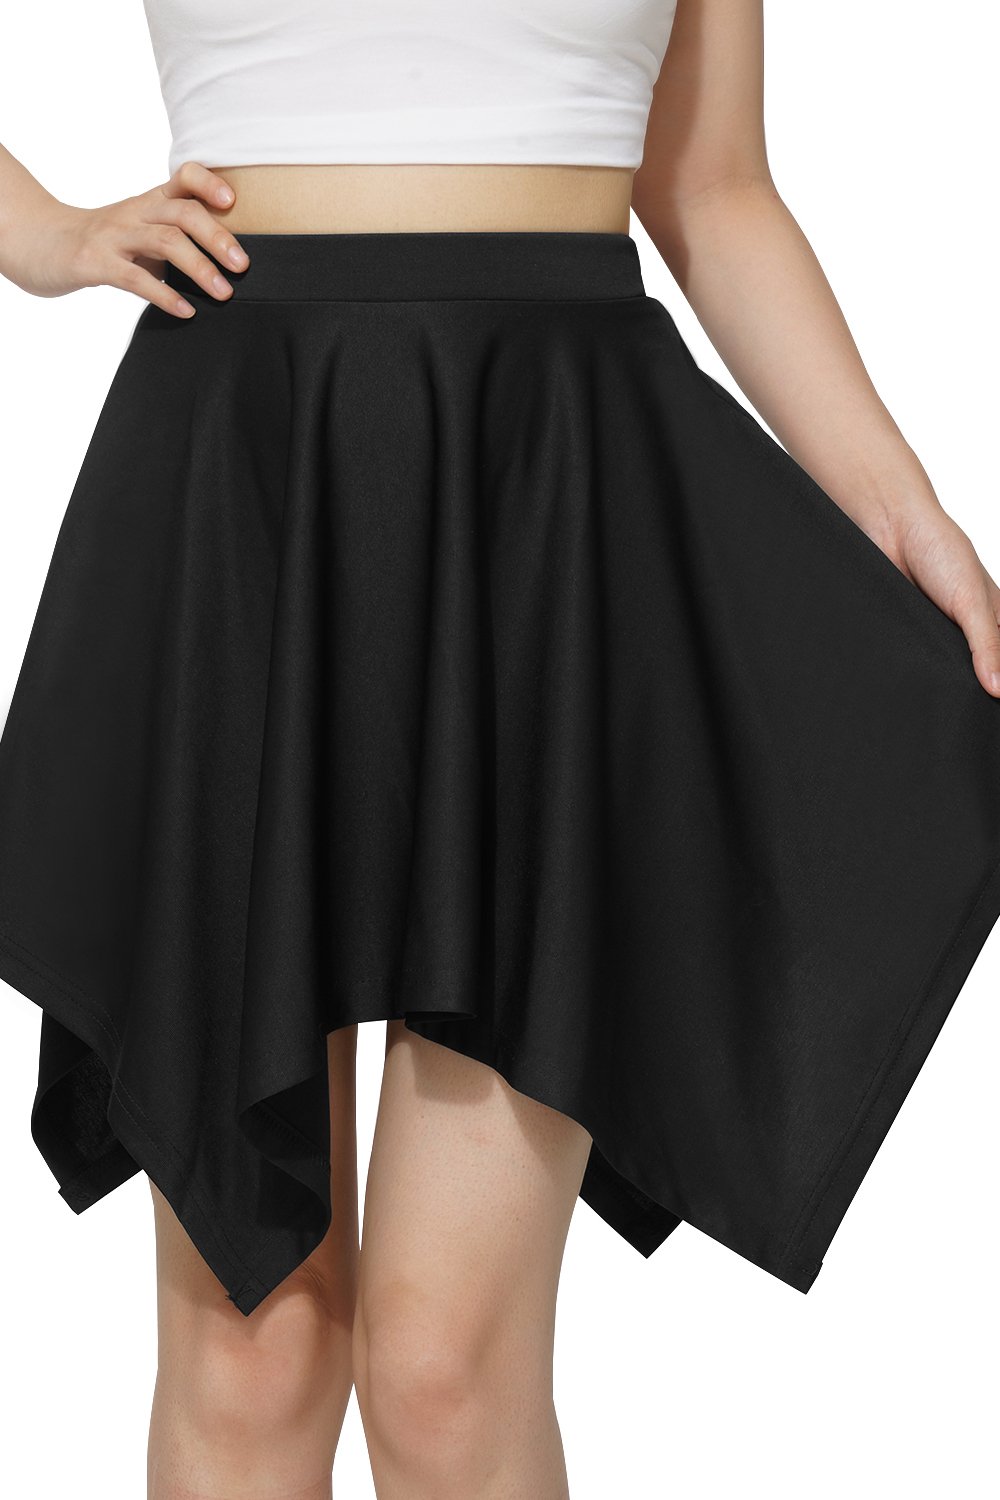 Basic Solid Stretchy High Waist A-line Flared Skater Skirt